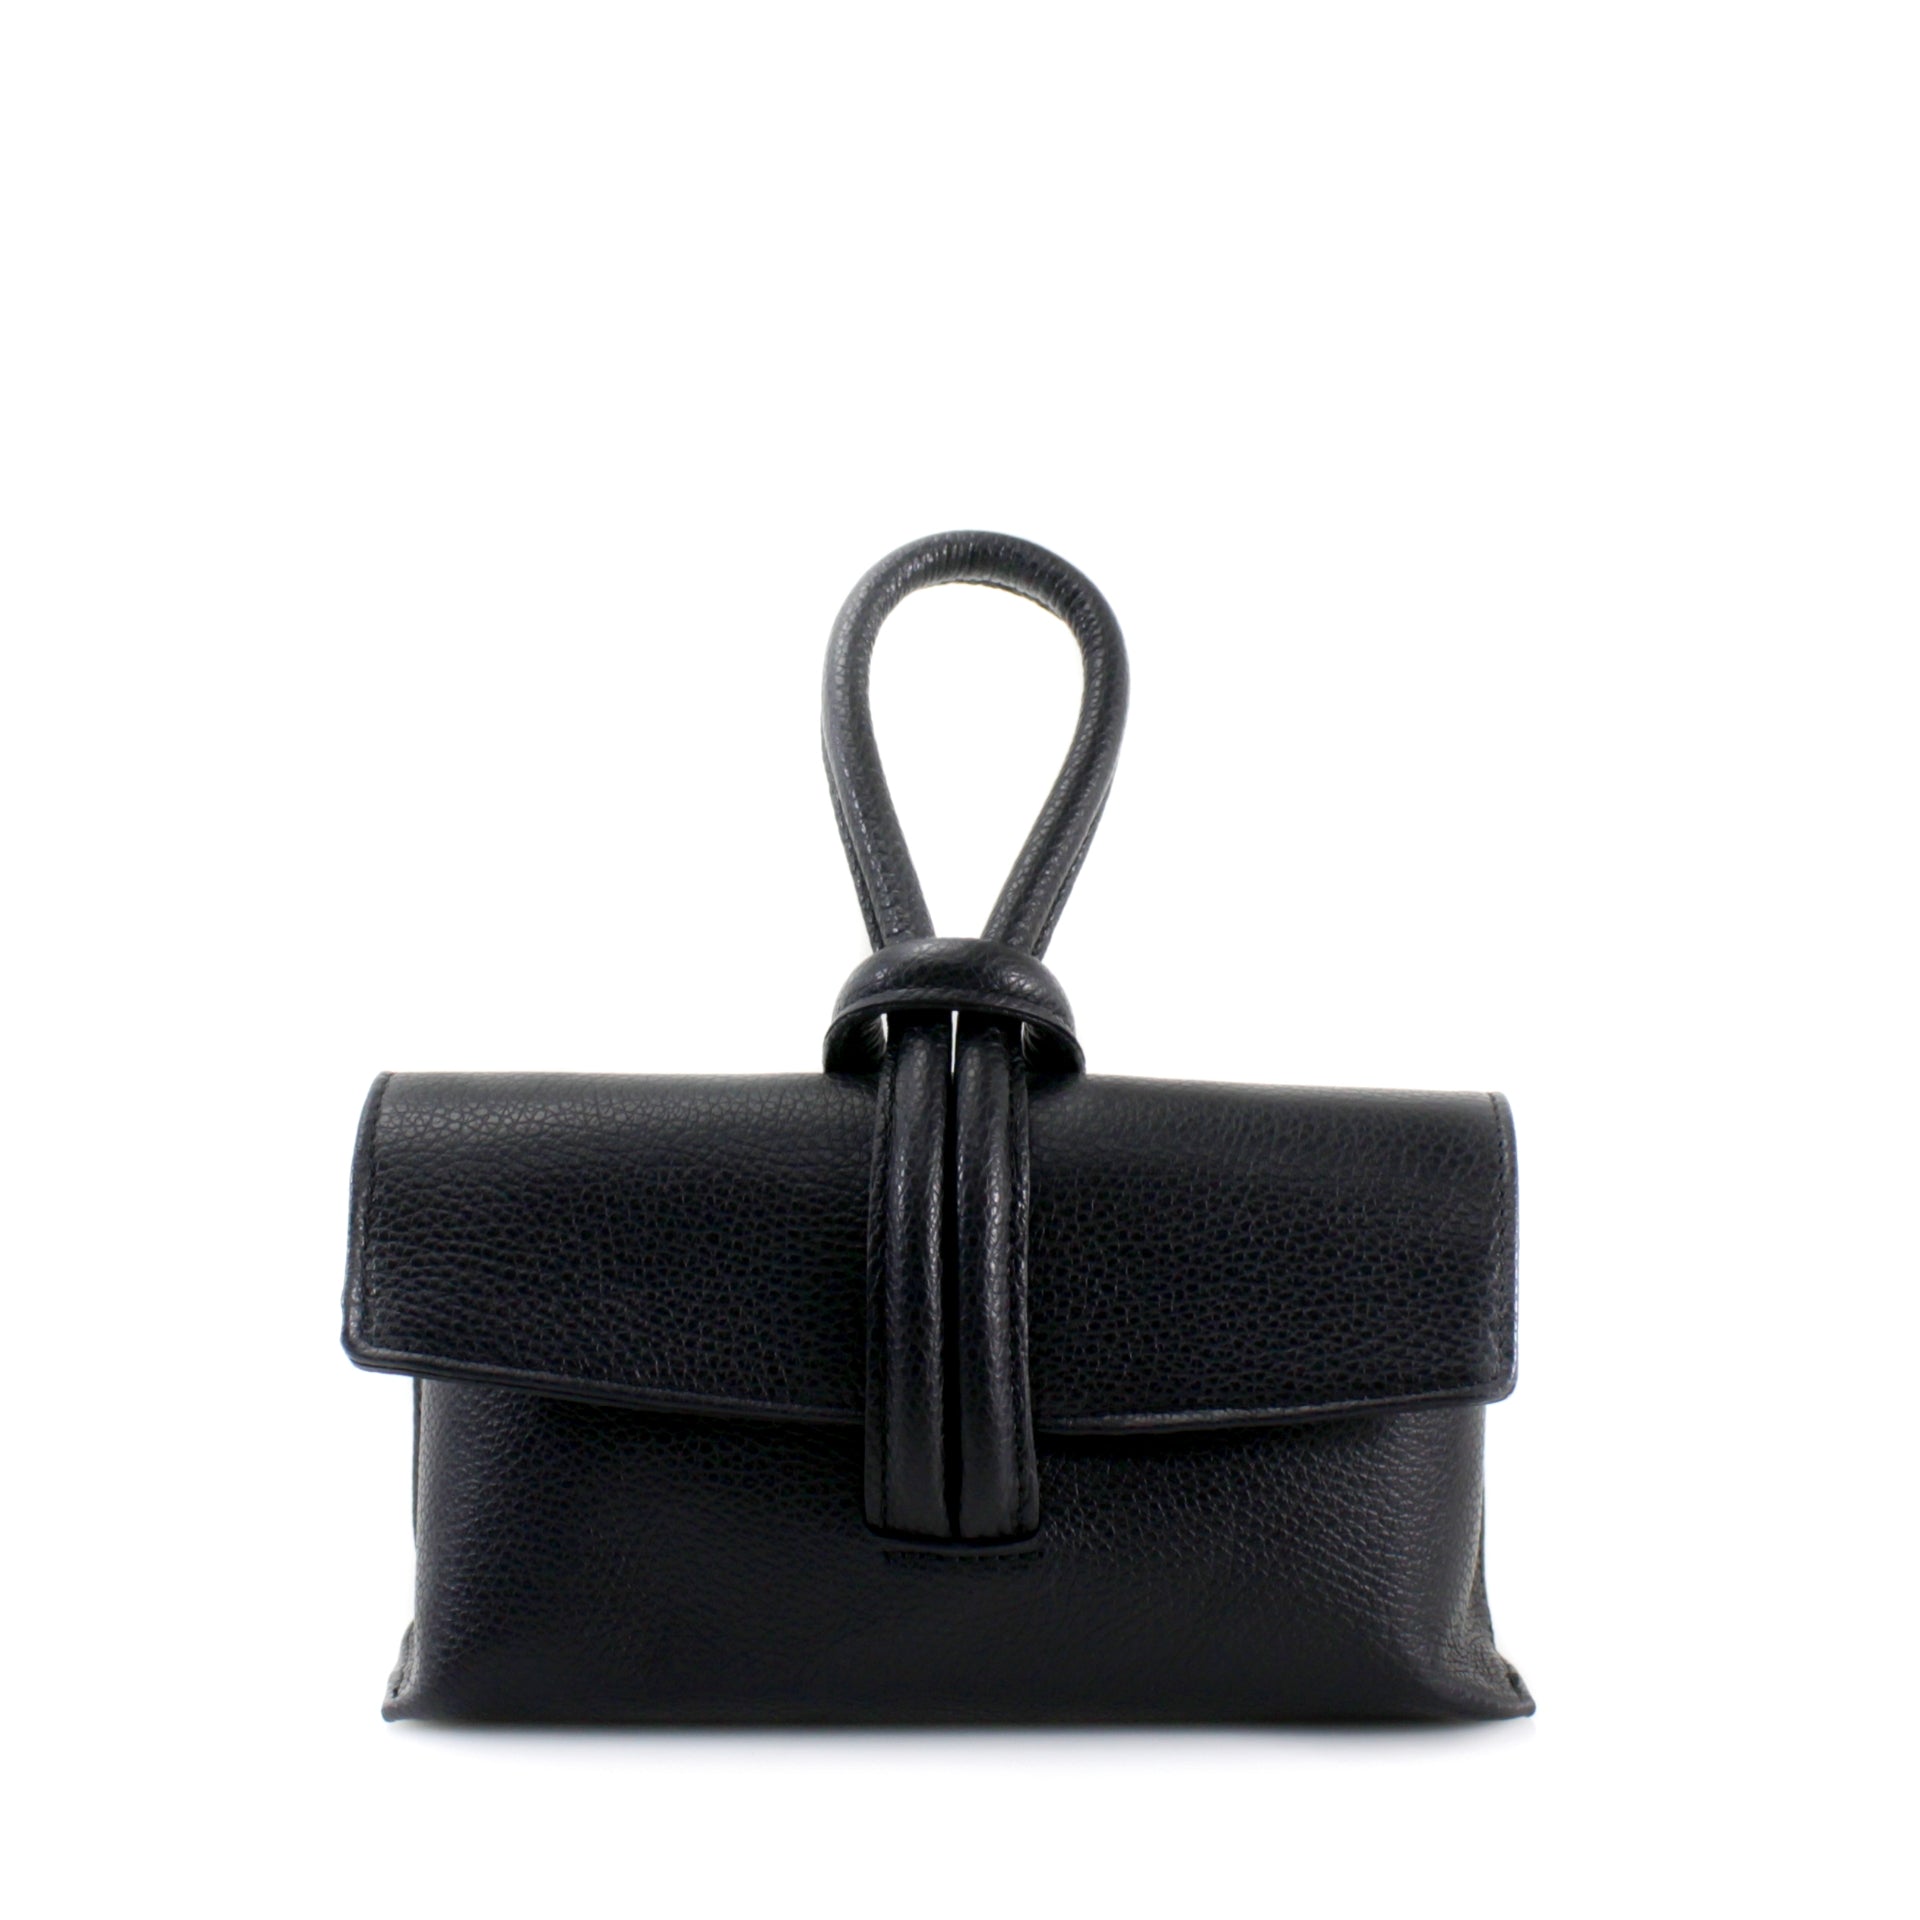 Chic & Sassy Black Leather Clutch Bag